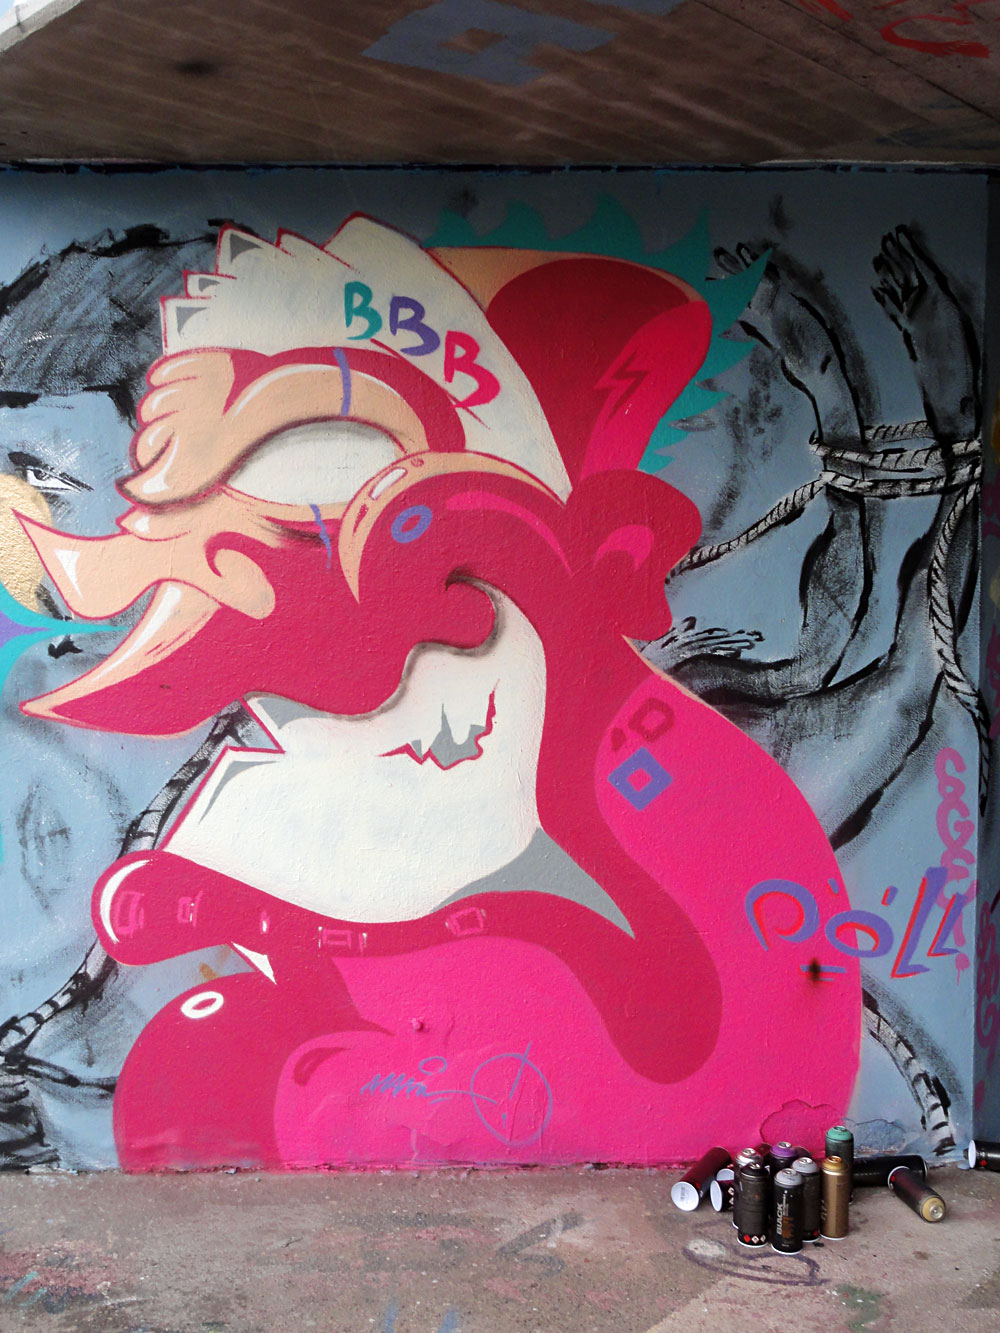 bad-breath-boys-1-graffiti-hanauer-landstrasse